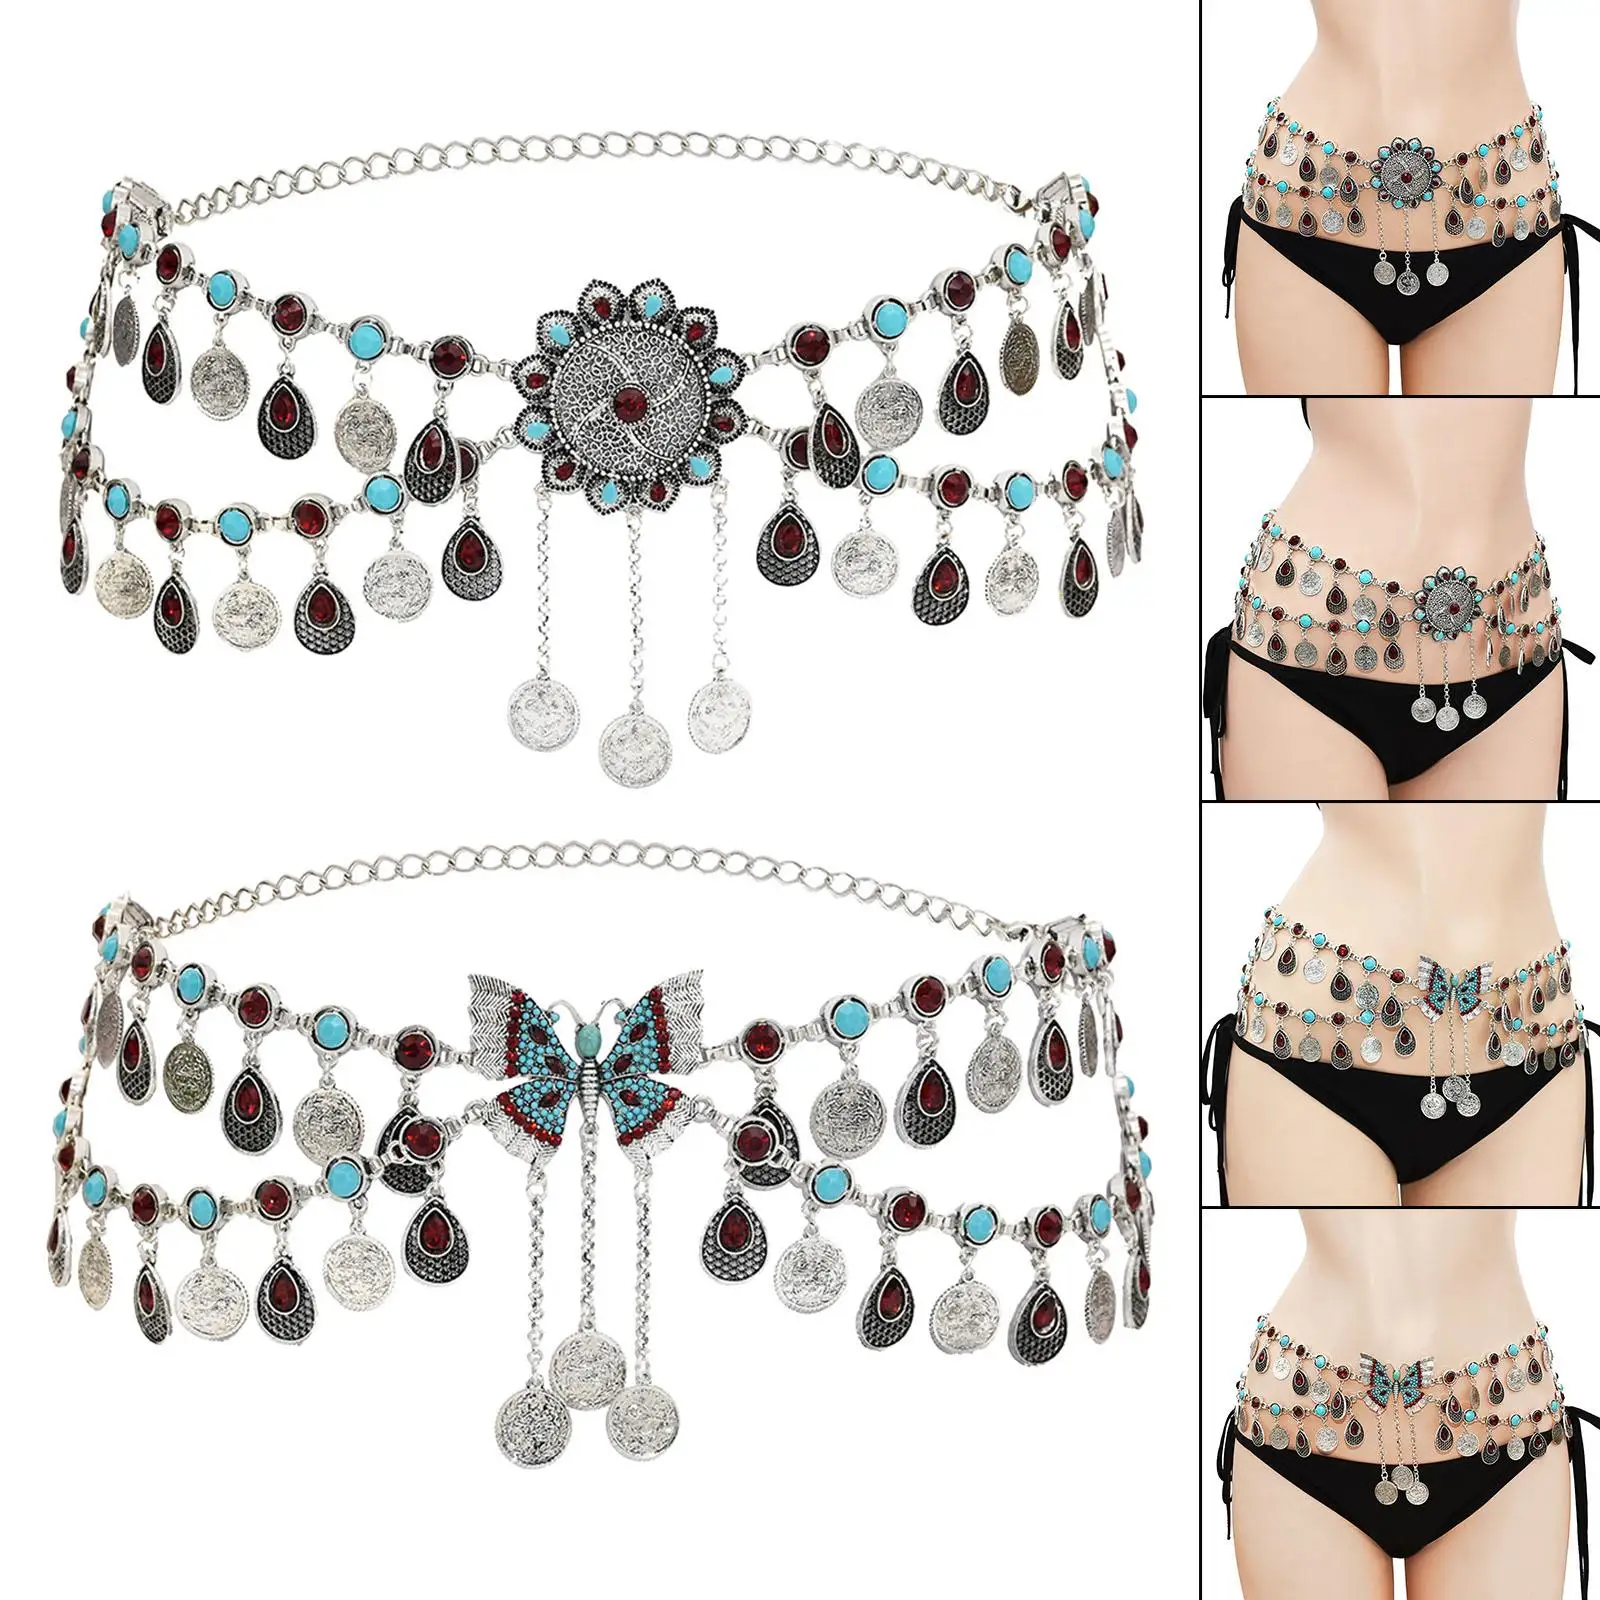 Vintage Belly Body Chain Waist Chain Rhinestone Crystal Nightclub Party Jewelry Coin Pendant Costume Bikini Belt for Women Girls